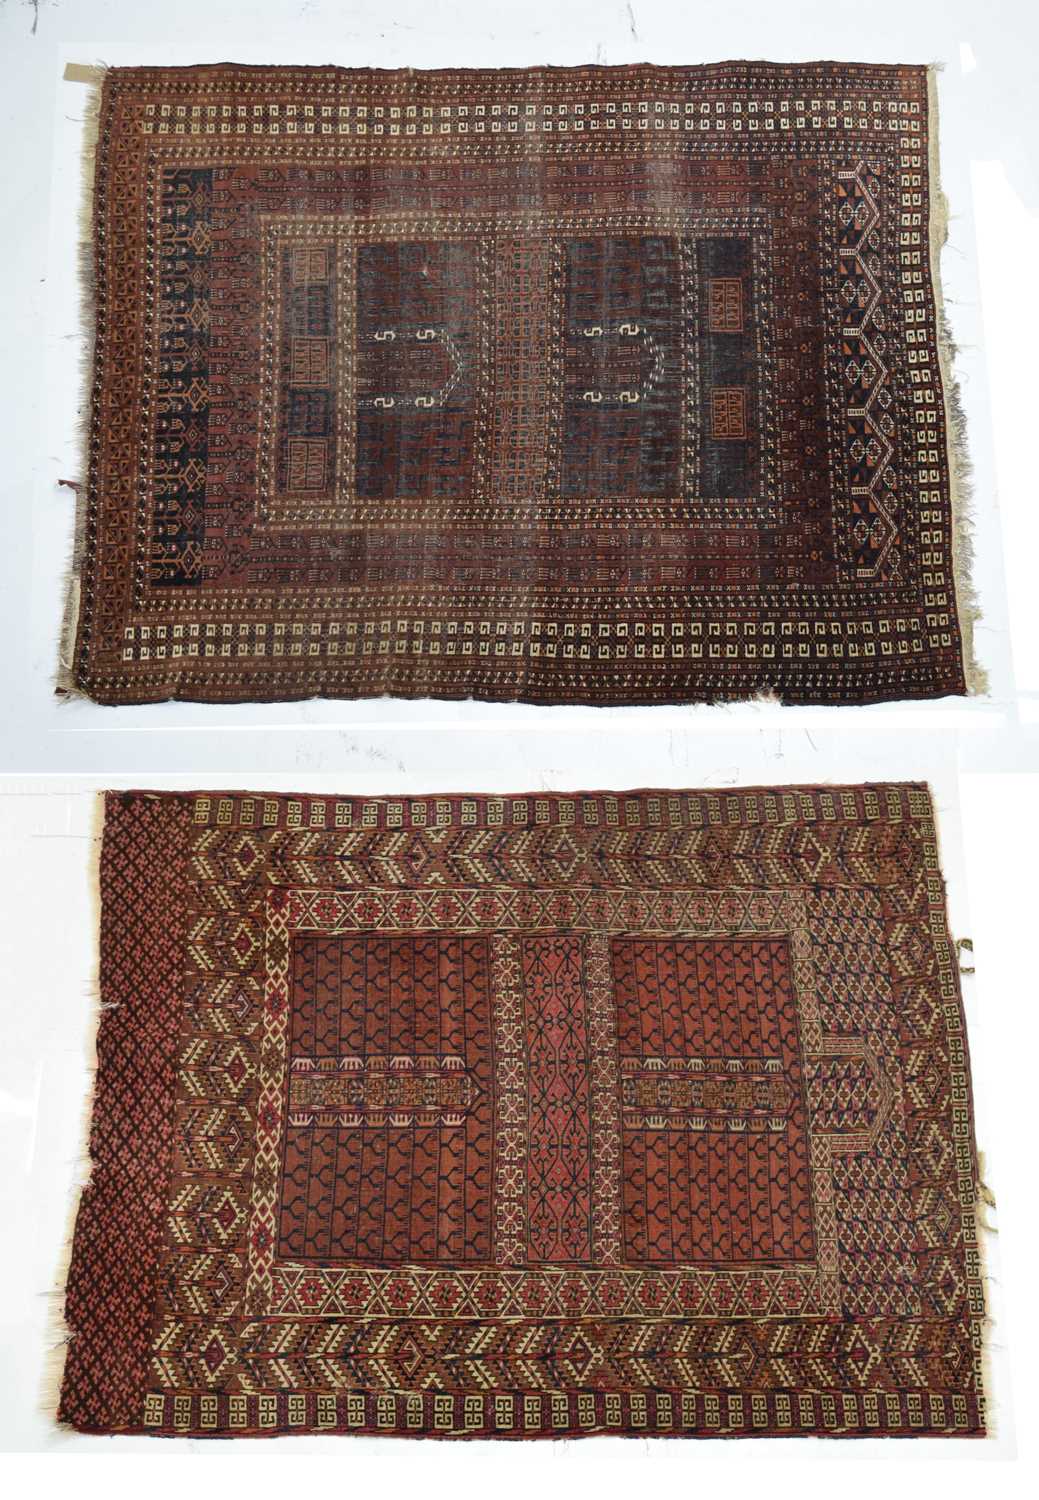 Two Eastern Ensi rugs